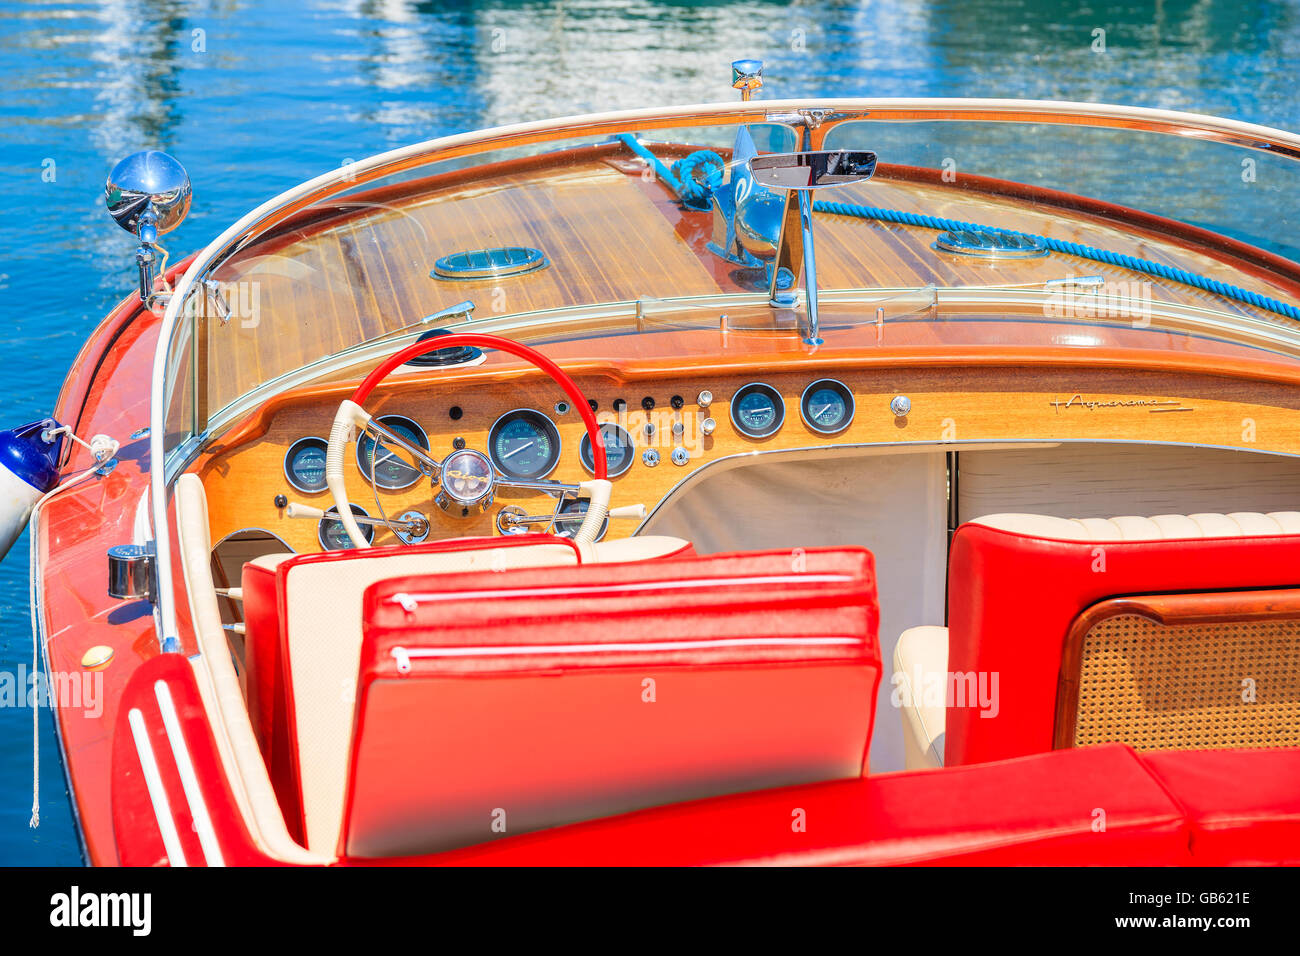 CALVI PORT, CORSICA ISLAND - JUN 28, 2015: stylish retro motor boat mooring in Calvi marina on western coast of Corsica island, Stock Photo